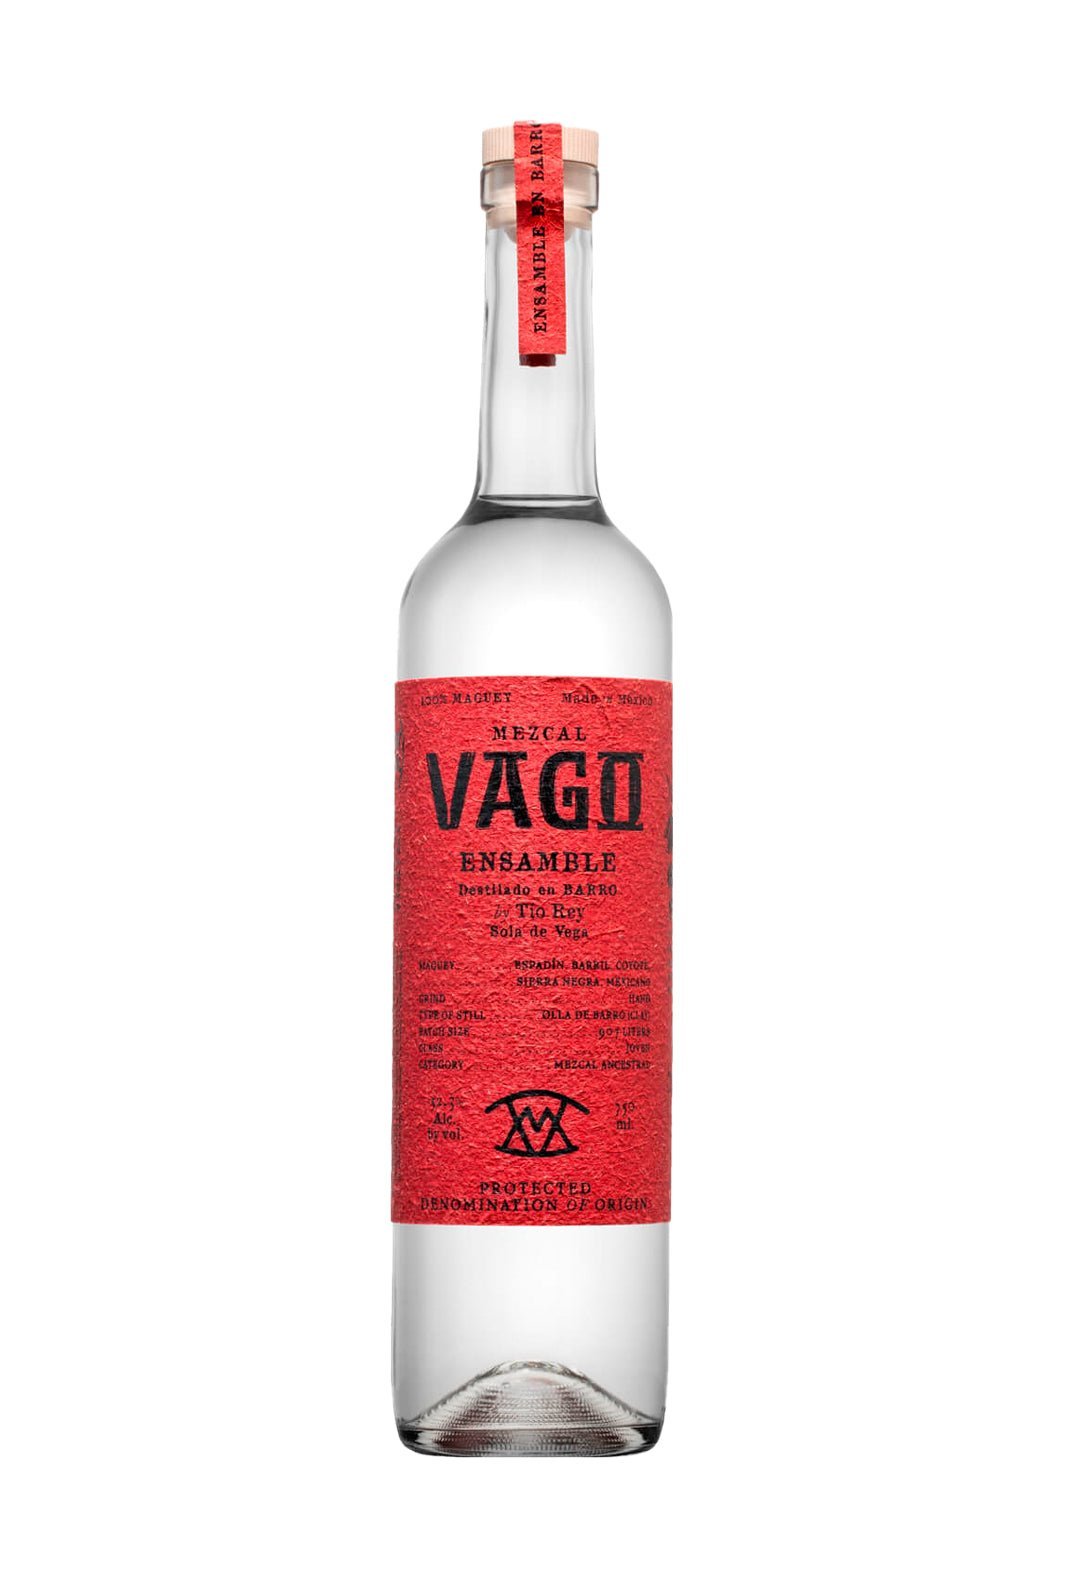 Mezcal Vago Ensamble en Barro By Tio Rey 49.9 % 700ml | Tequila | Shop online at Spirits of France